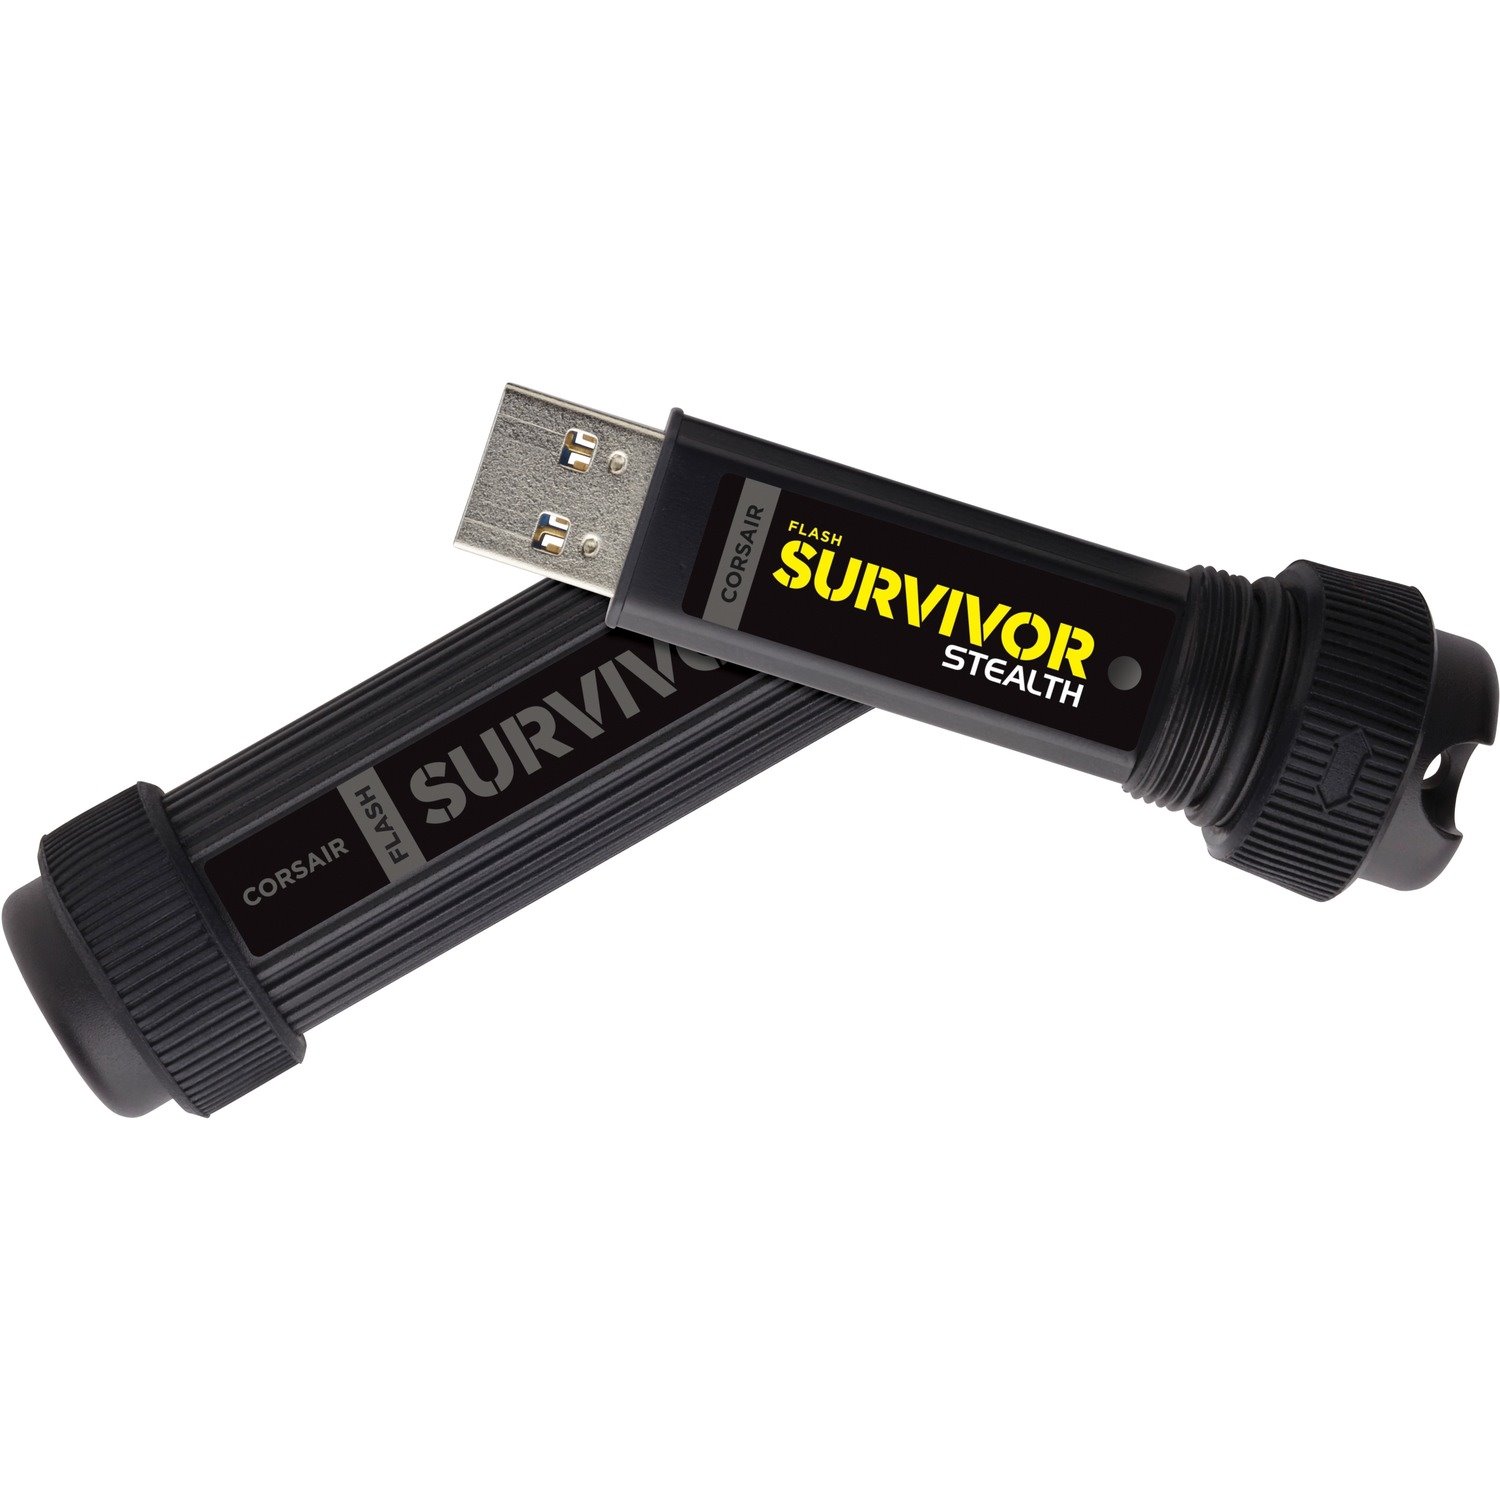 Corsair Flash Survivor 32 GB USB 3.0 Flash Drive - Black